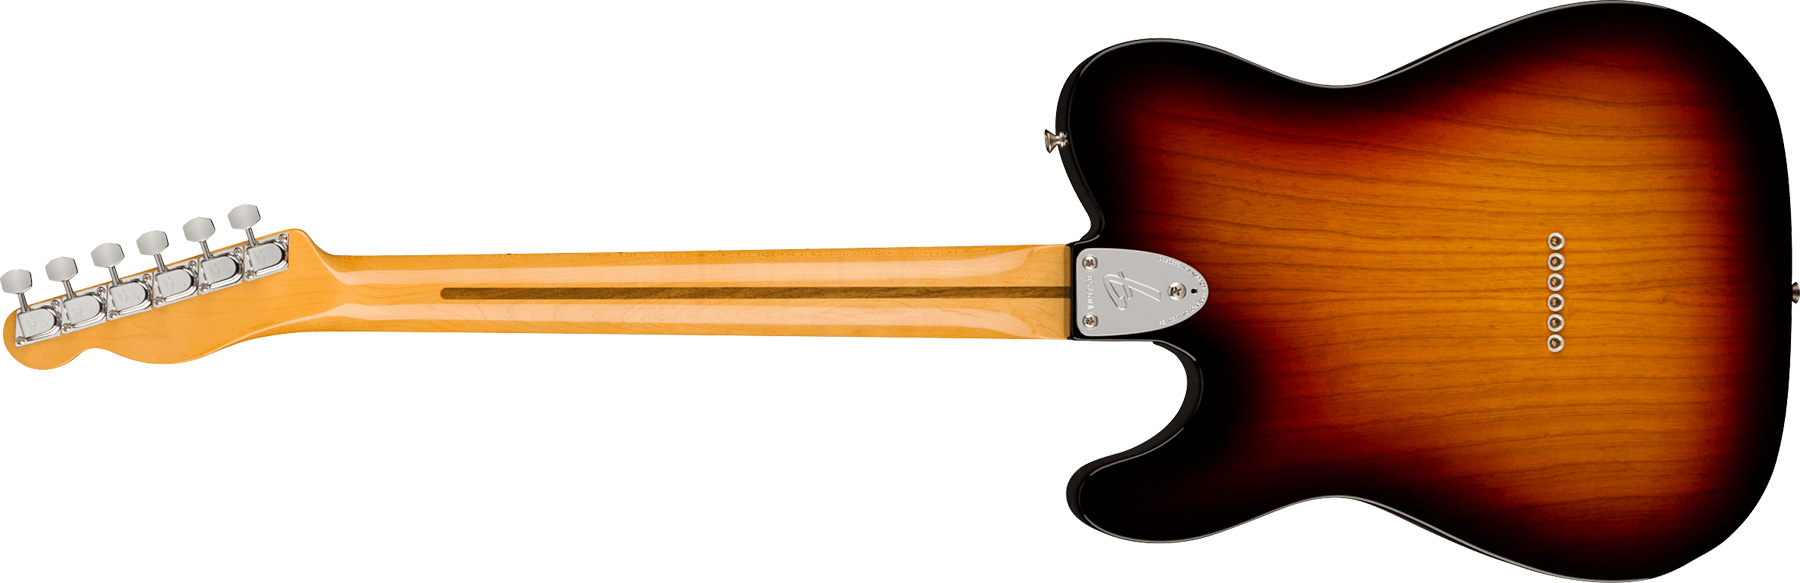 Fender Tele Thinline 1972 American Vintage Ii Usa 2h Ht Mn - 3-color Sunburst - Guitare Électrique Forme Tel - Variation 1